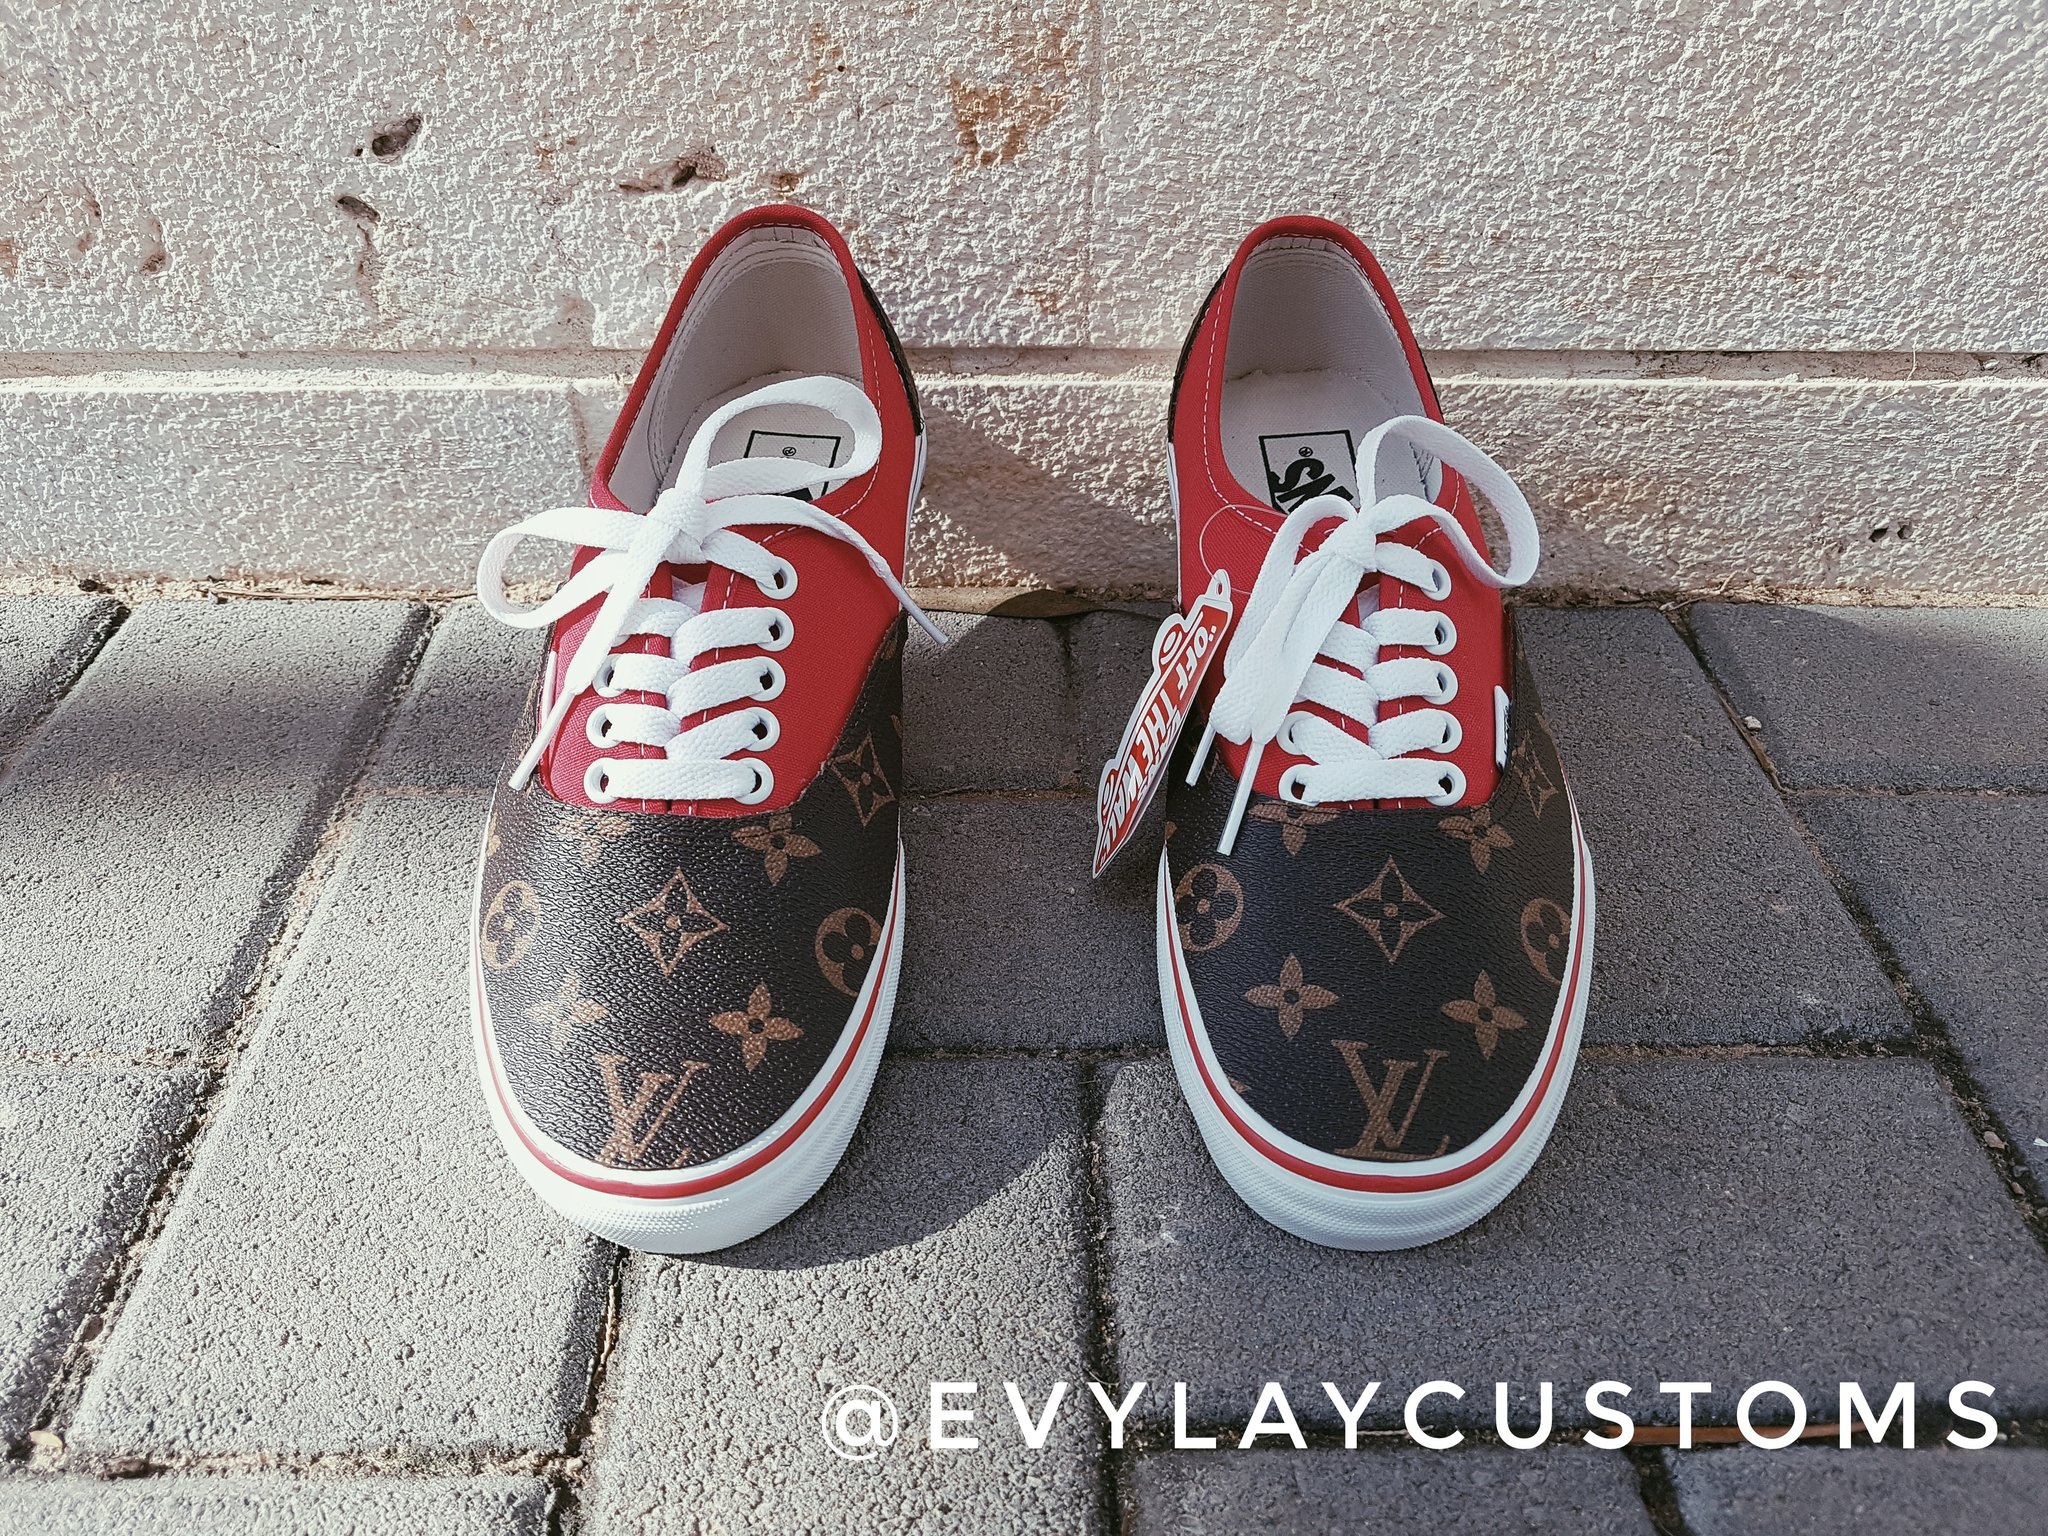 🅔🅥🅨🅛🅐🅨 customs on X: Vans Classic X Louis Vuitton Made by evylay  #evylaycustoms #custom #customsneakers #calabasas #angelusdirect #shoes  #goyard #art #jordan #sneakerholics #shoegasm #sup